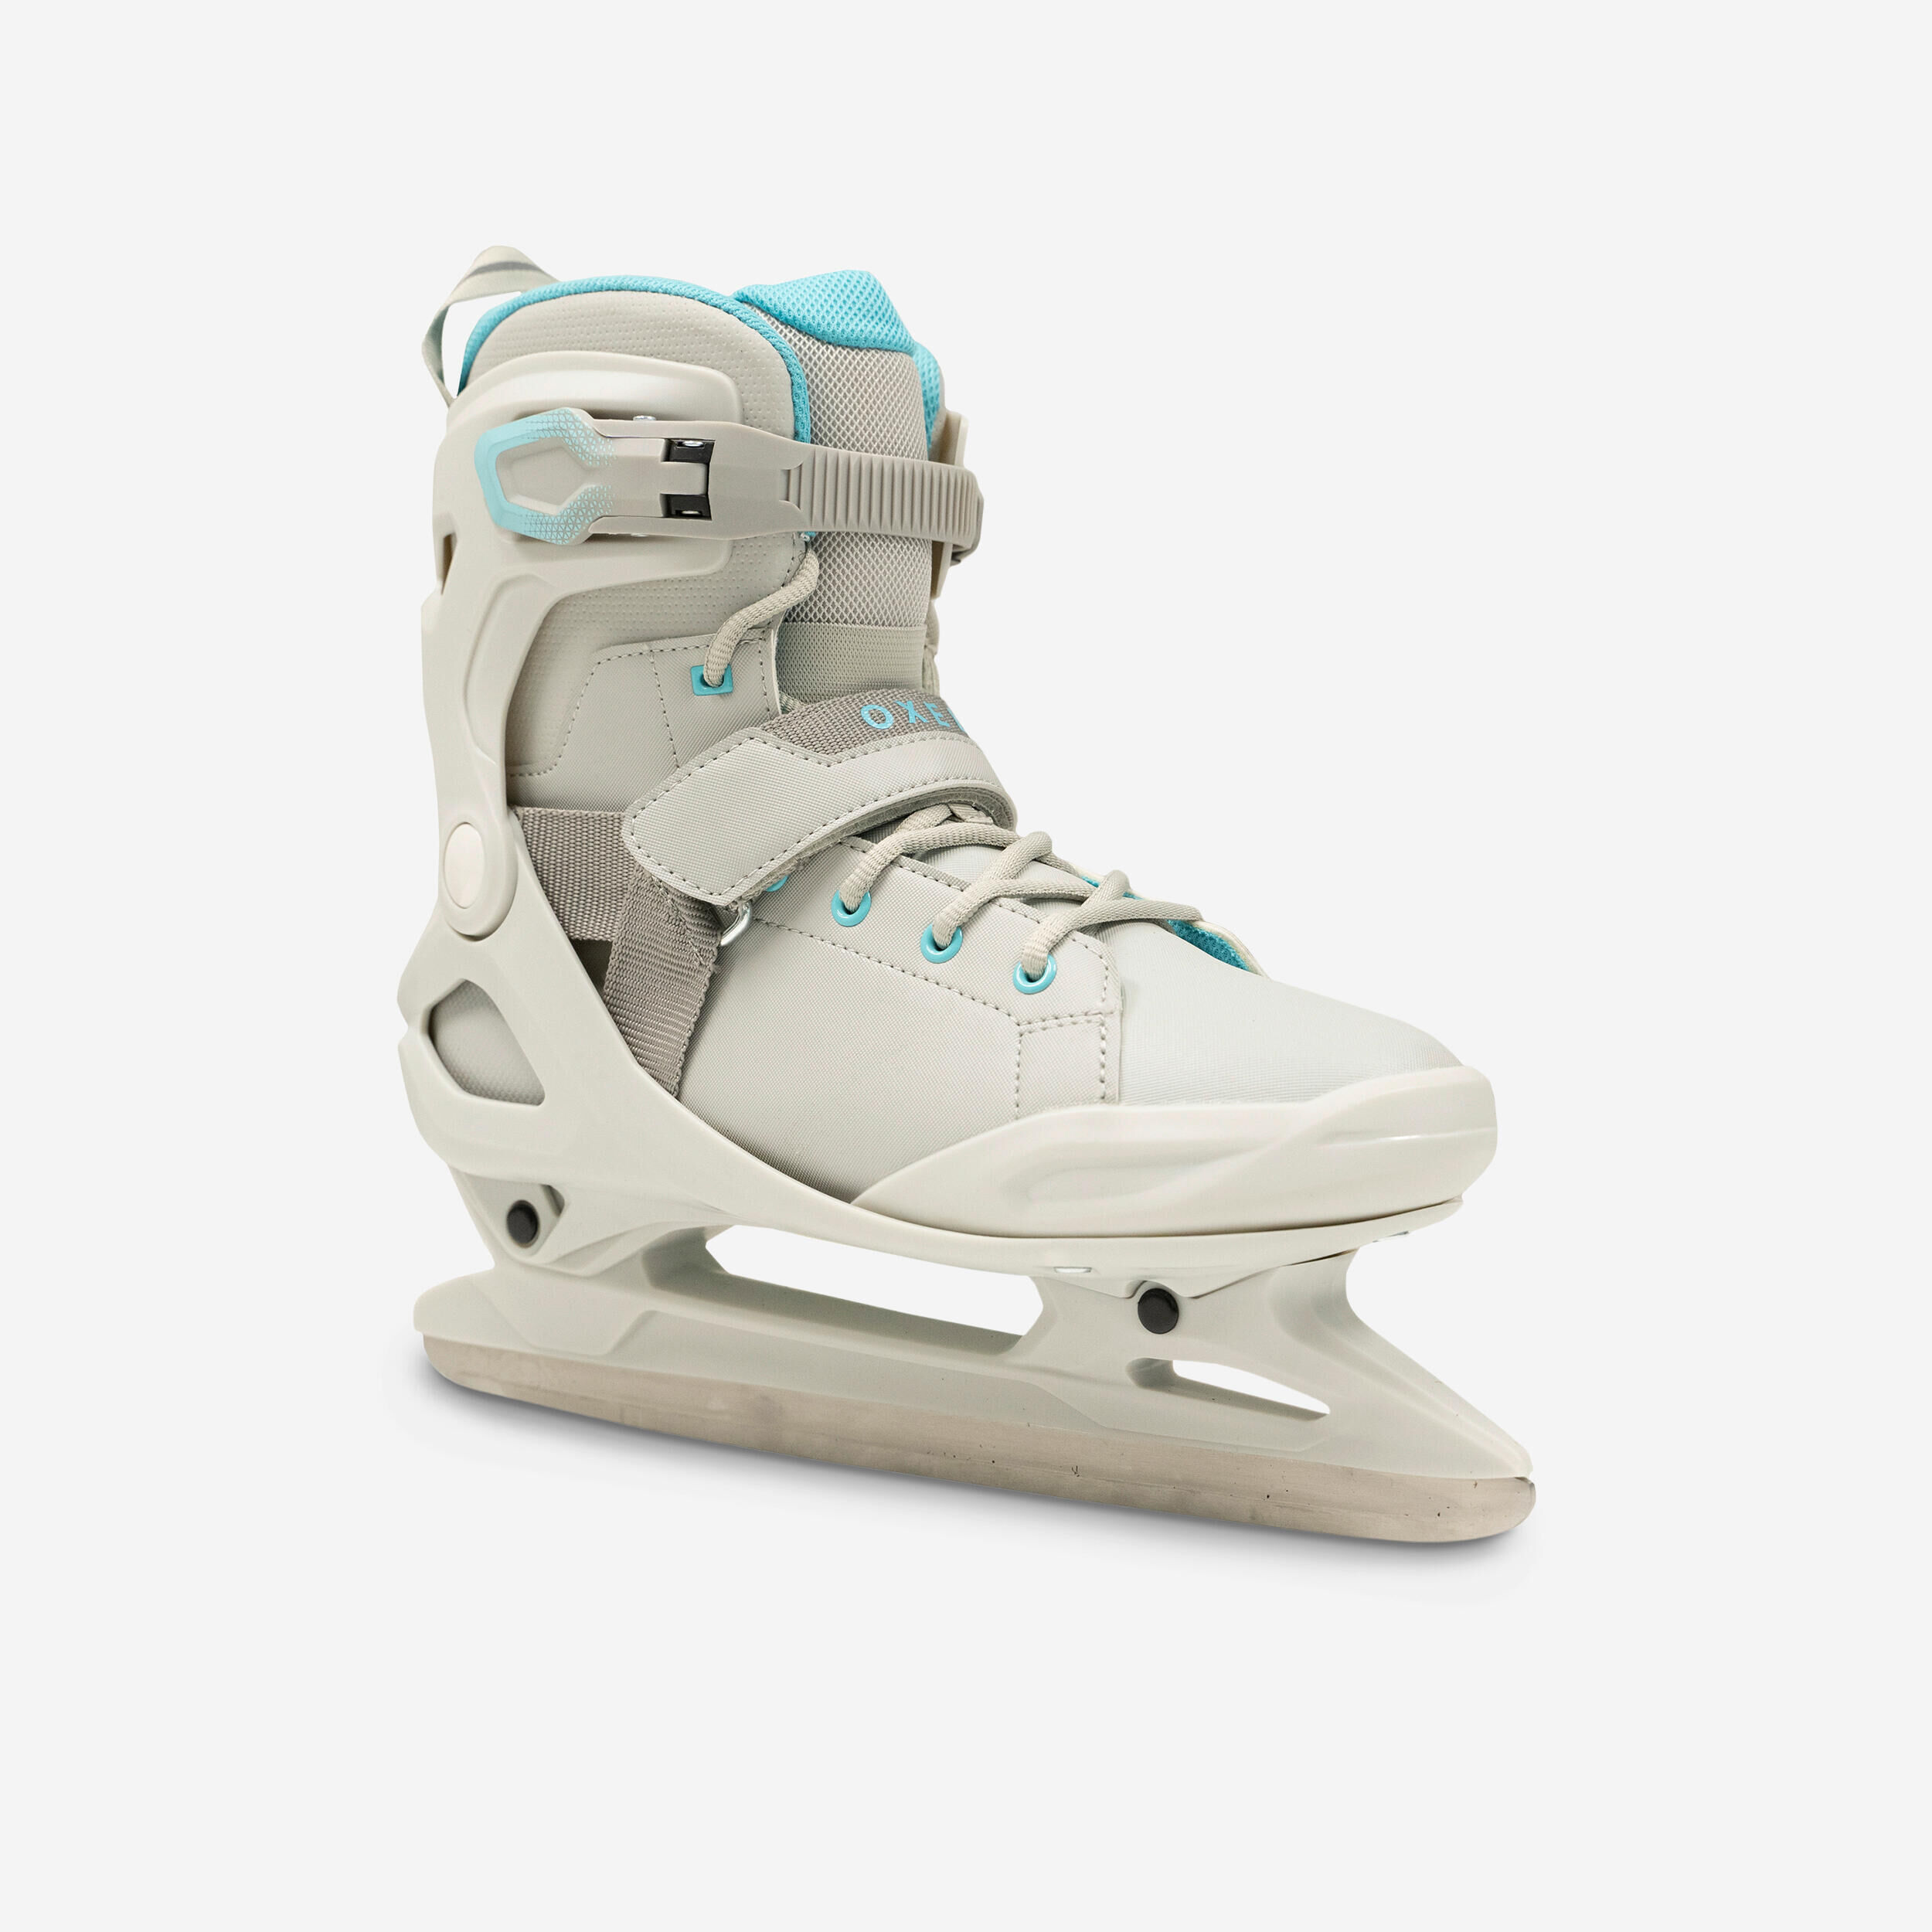 OXELO Women's Ice Skates Fit 500 - Grey/Turquoise